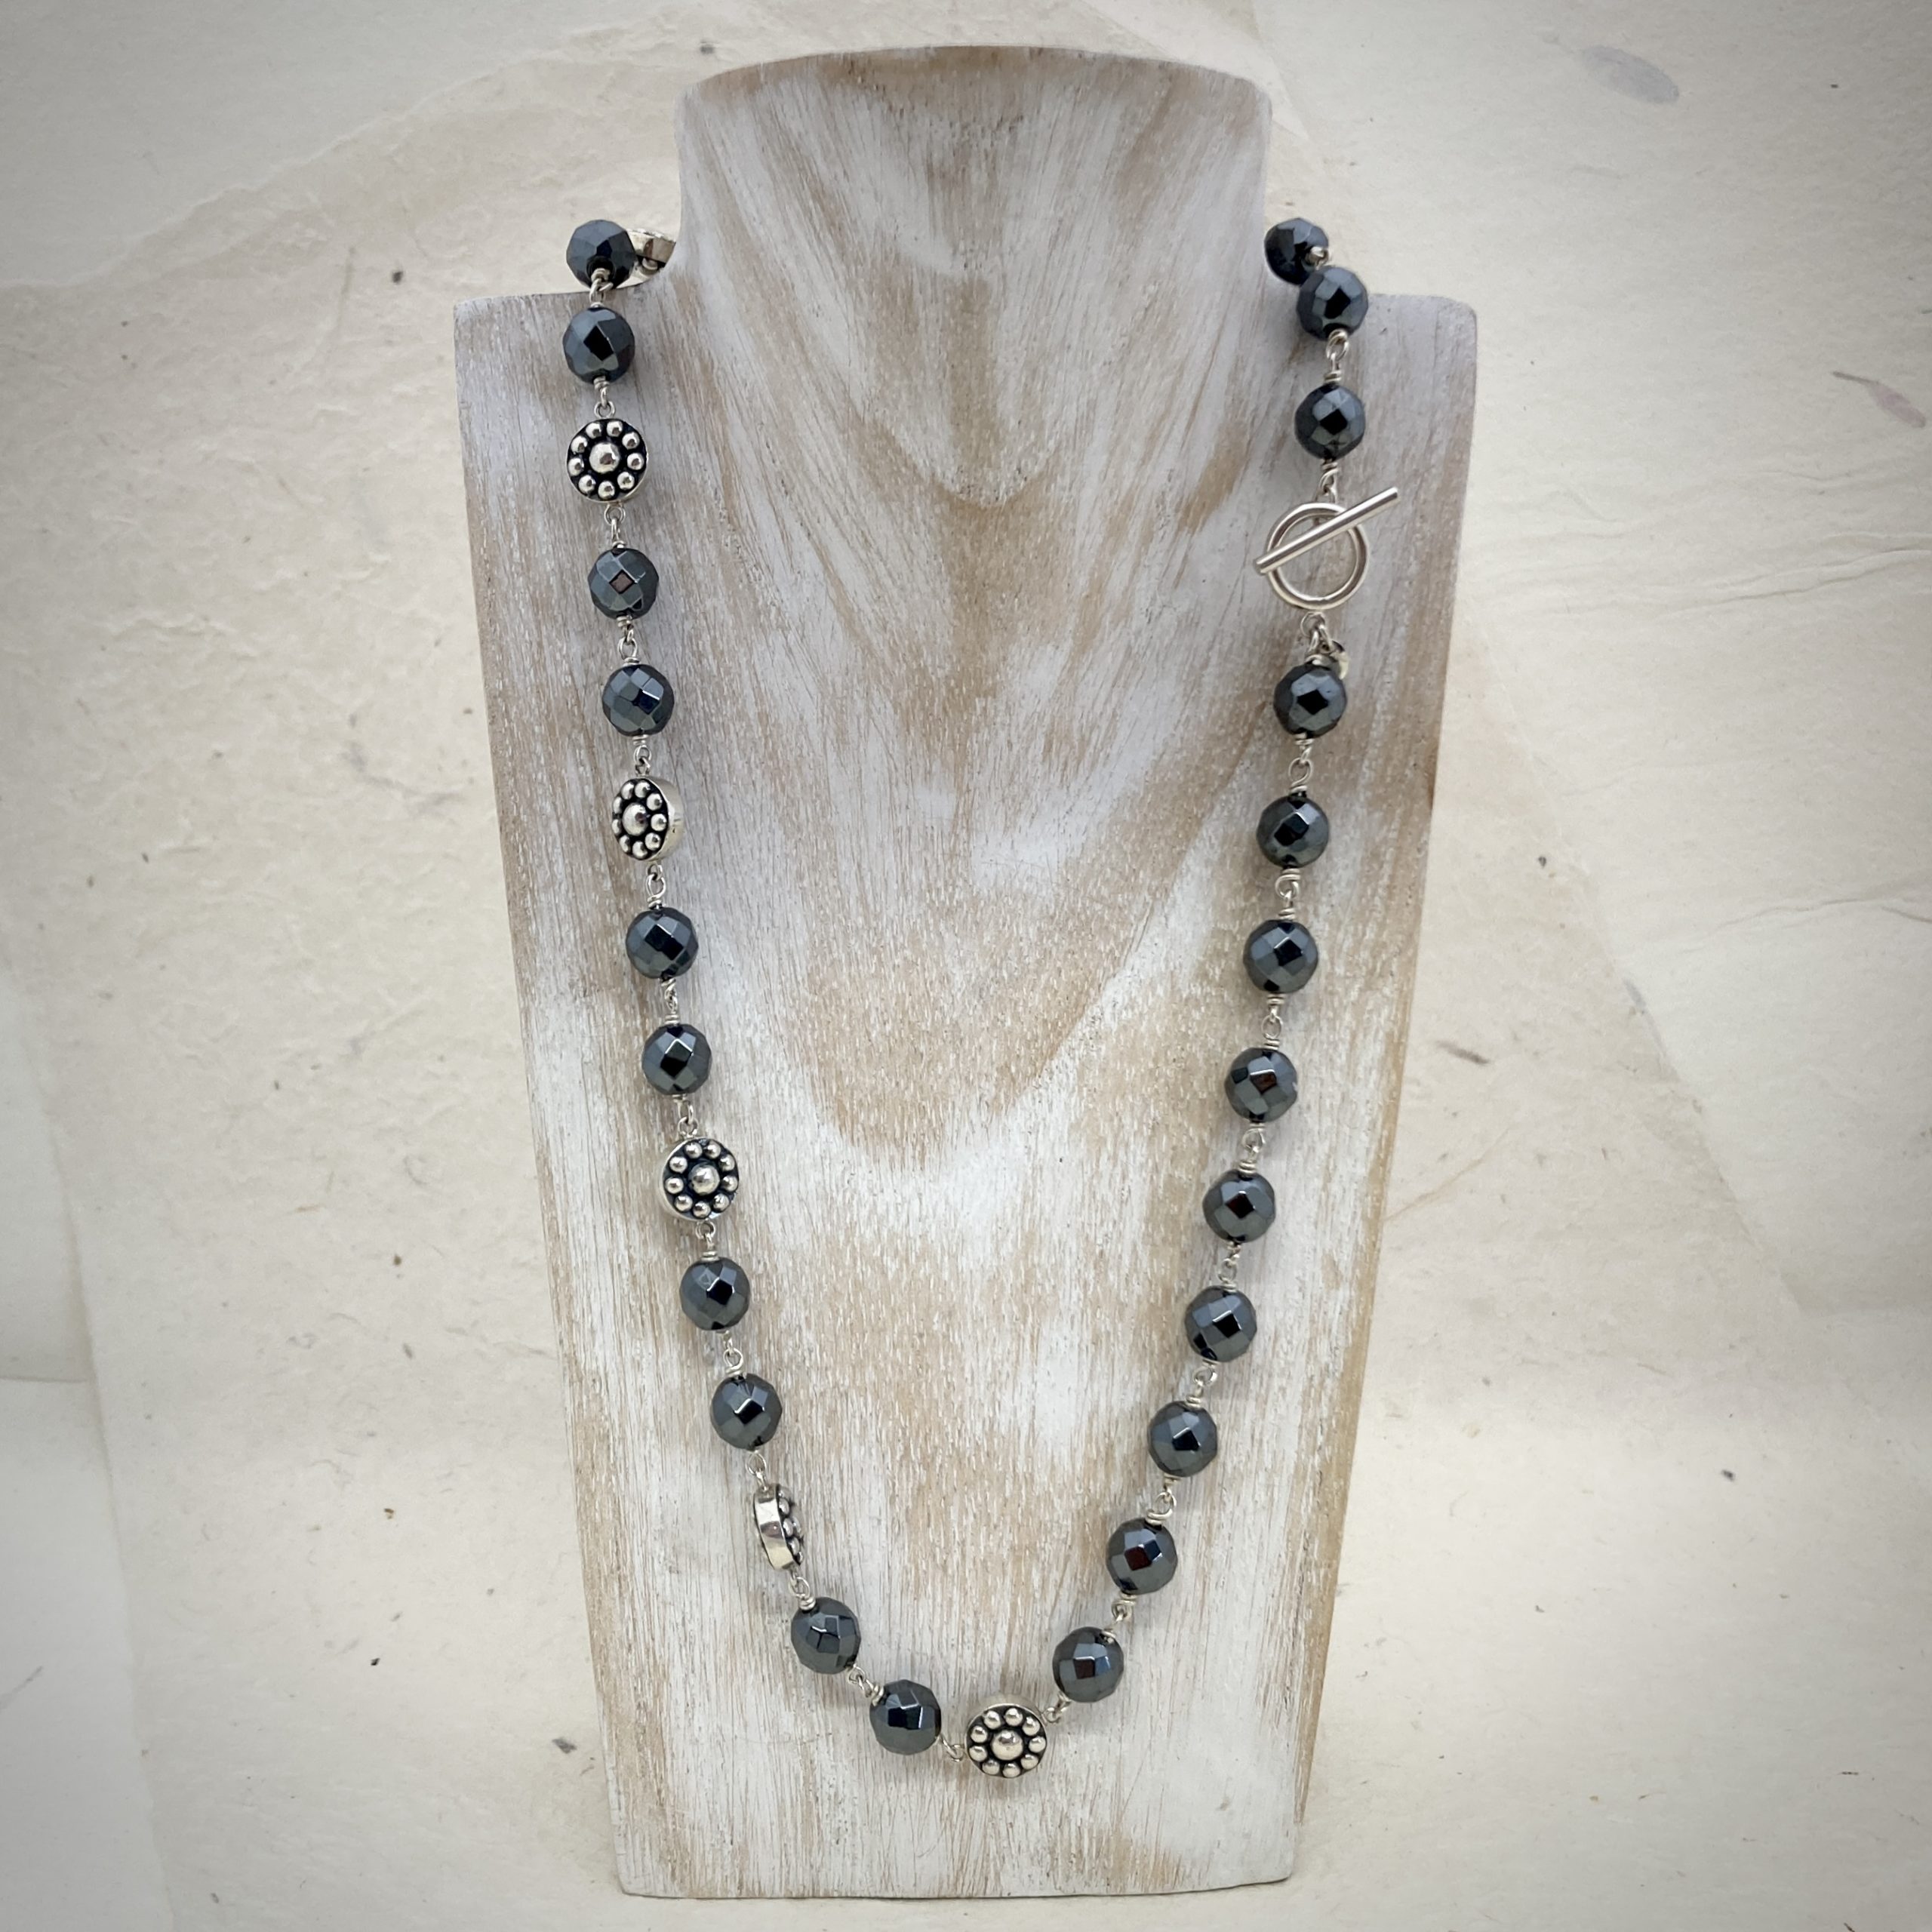 10mm Hematite Necklace, Large Round Gray Stone Beads